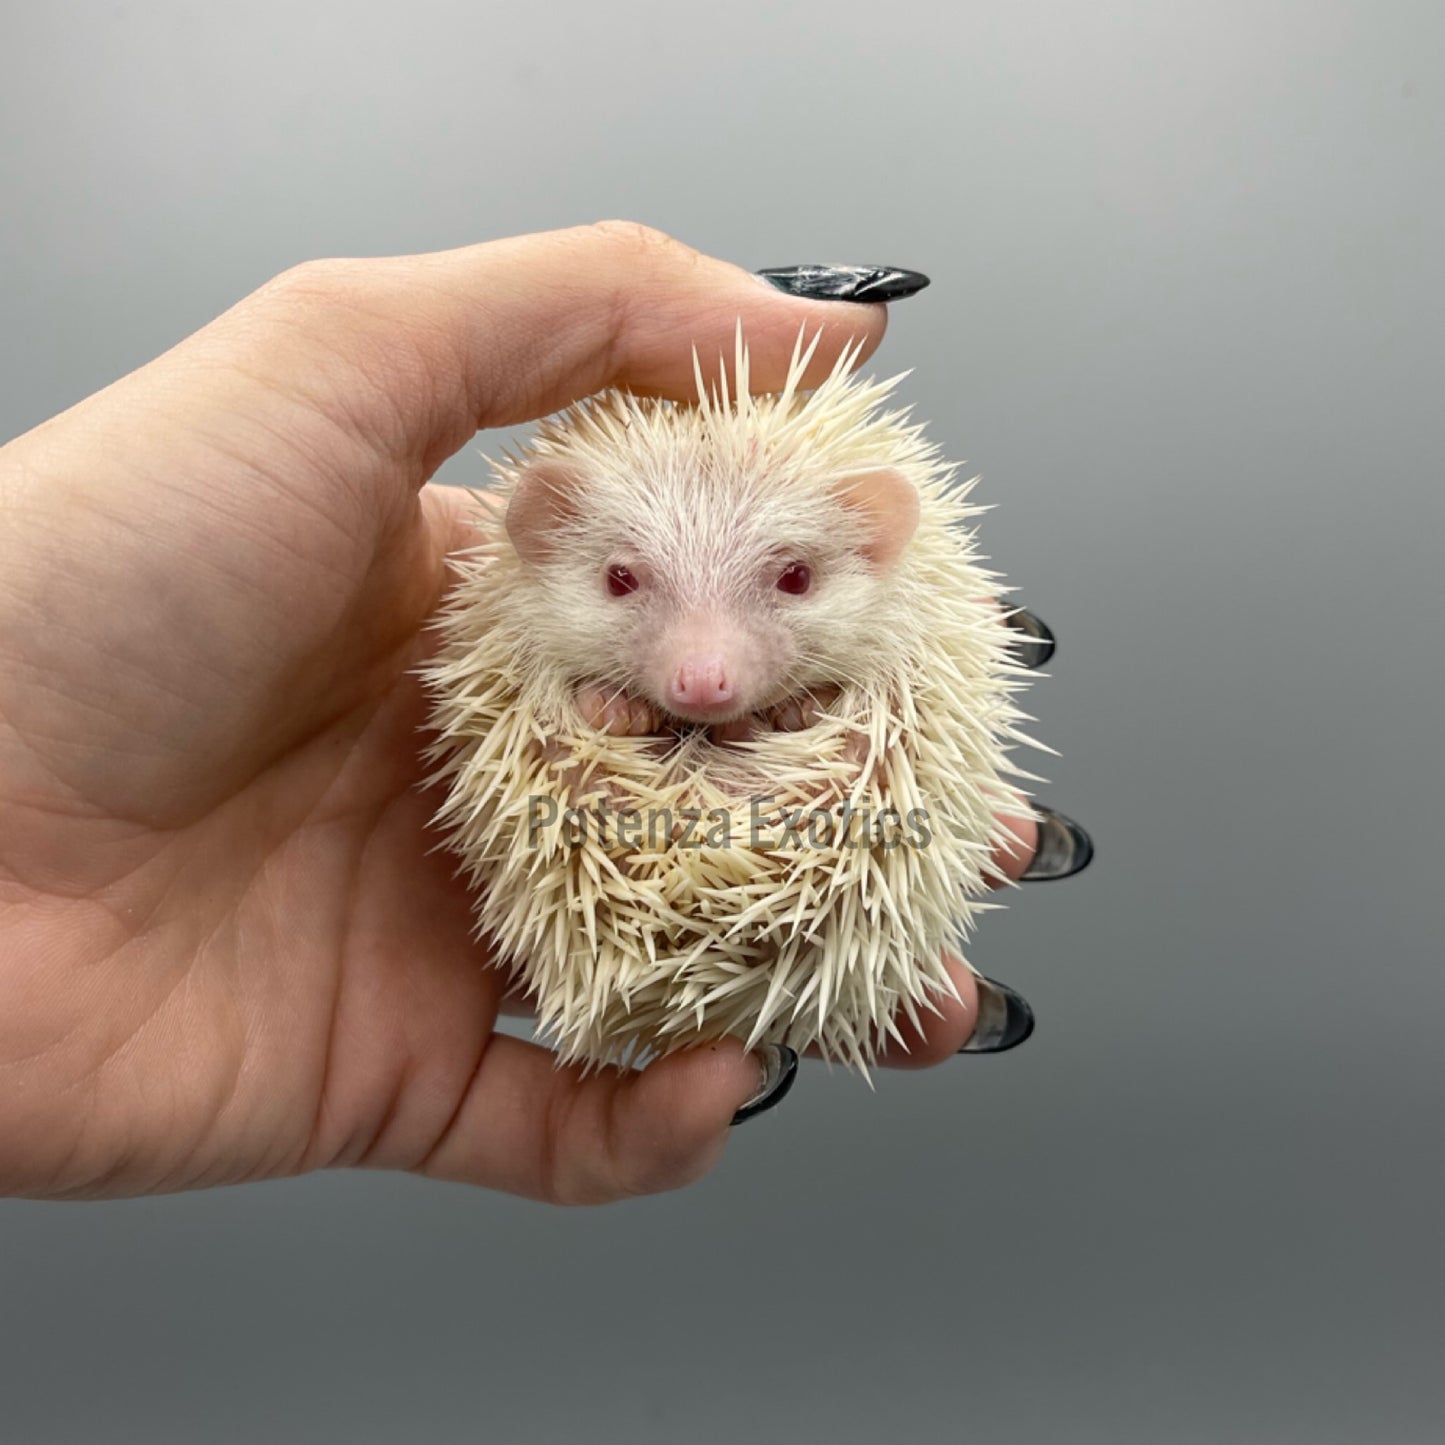 Baby Hedgehog for Sale Texas